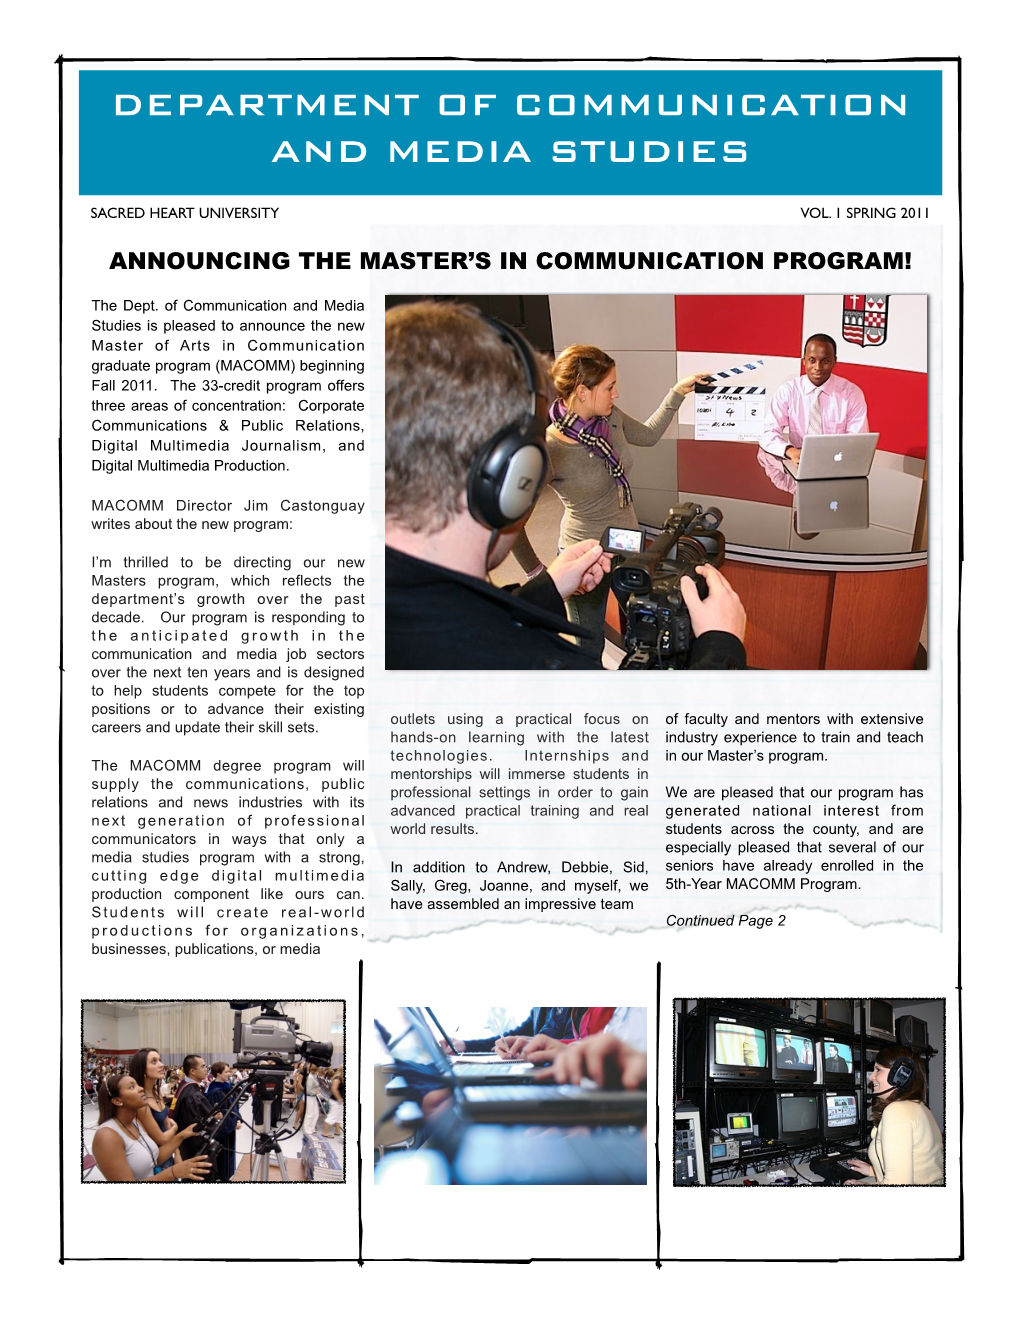 Communication and Media Studies Newsletter Volume 1, Spring